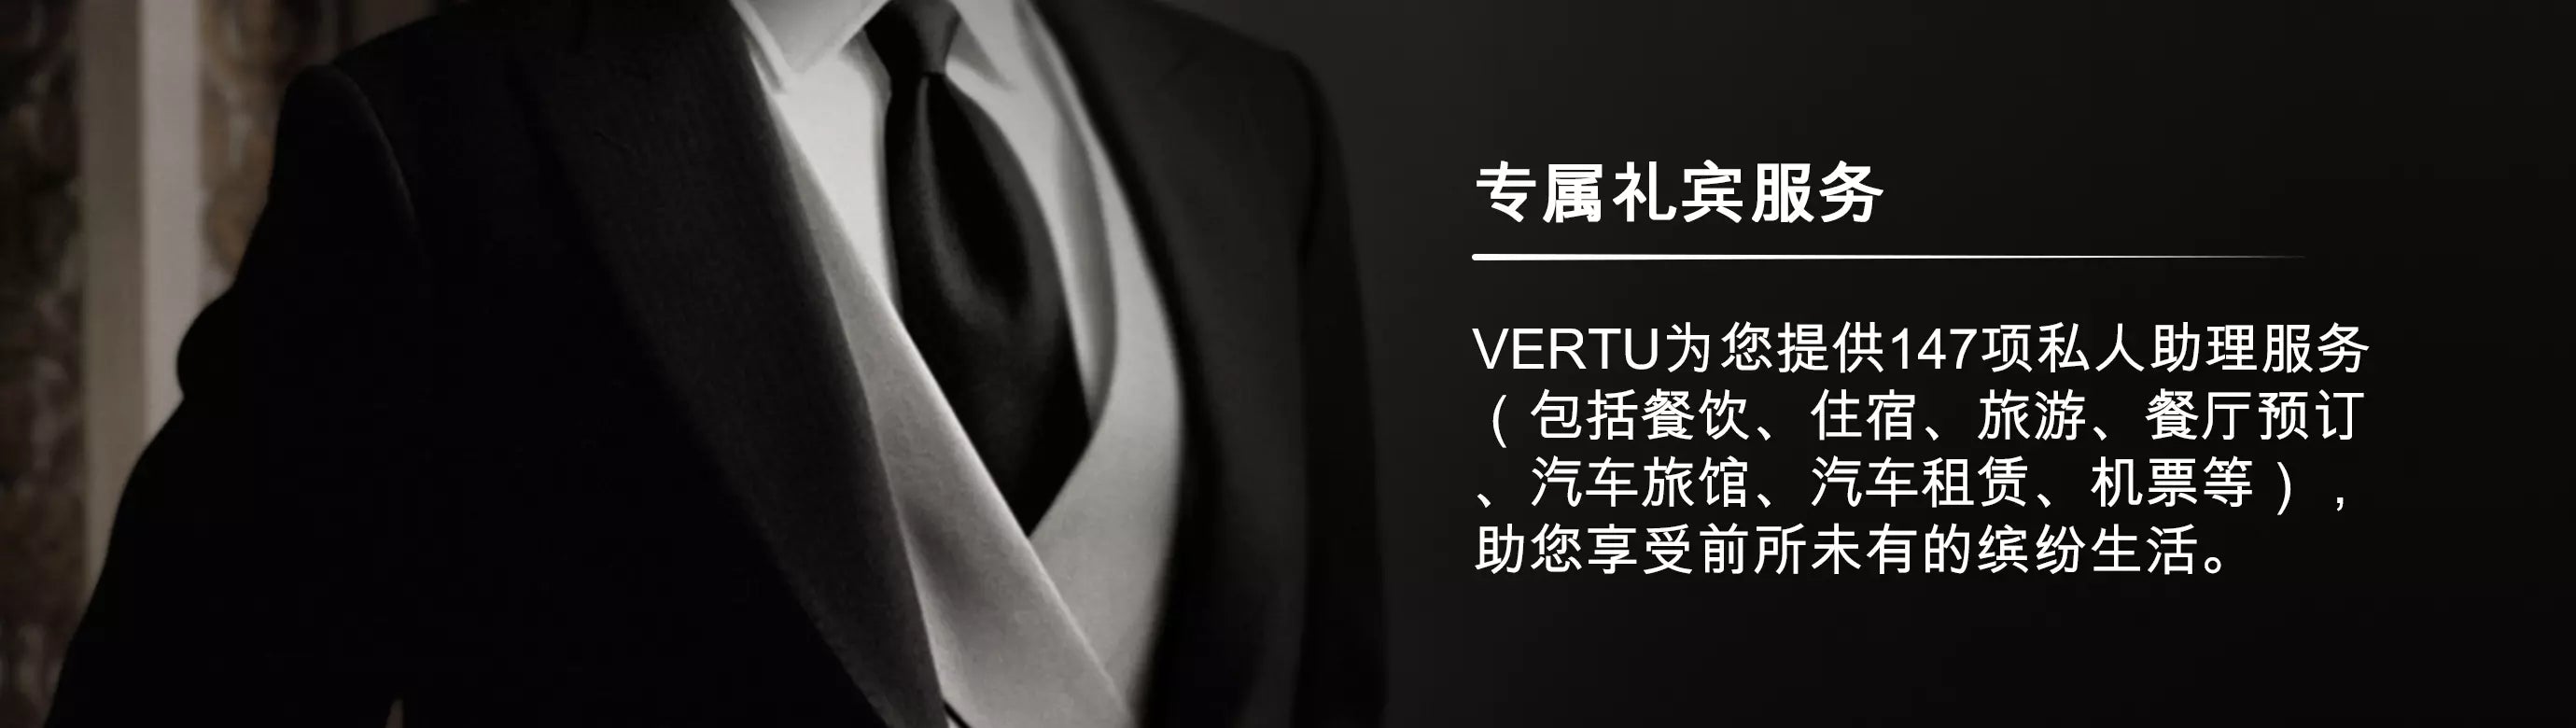 VERTU METAVERTU 静谧蓝鳄鱼皮高定款 12GB+512GB/18+1TB